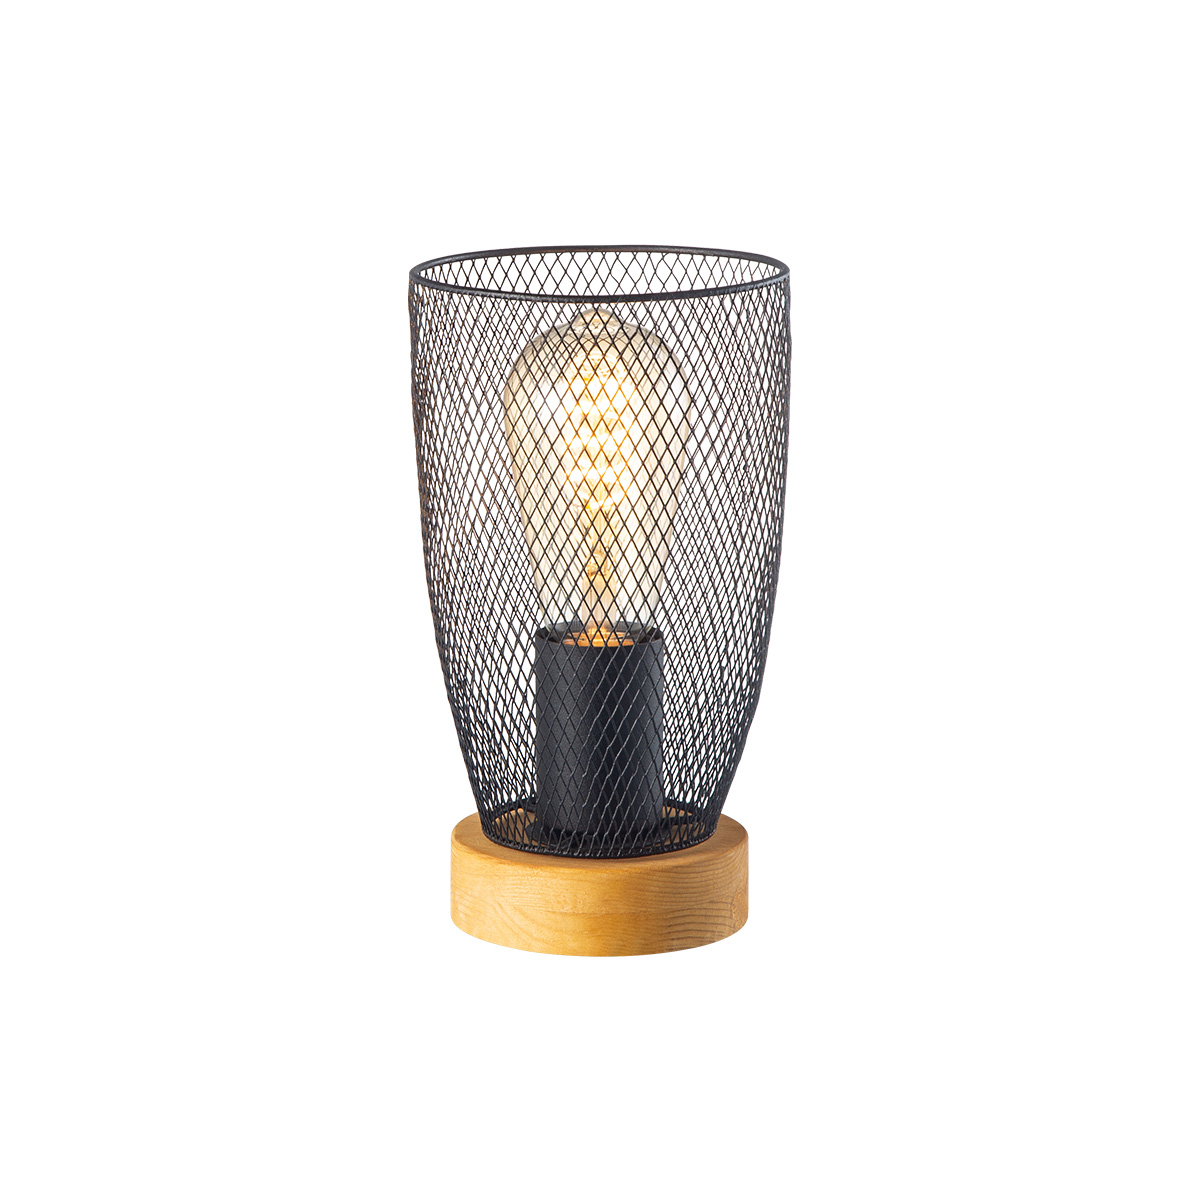 Tangla lighting - TLT7502-01BN - Table lamp 1 Light - metal + FSC wood - sand black + natural - mesh cup - E27